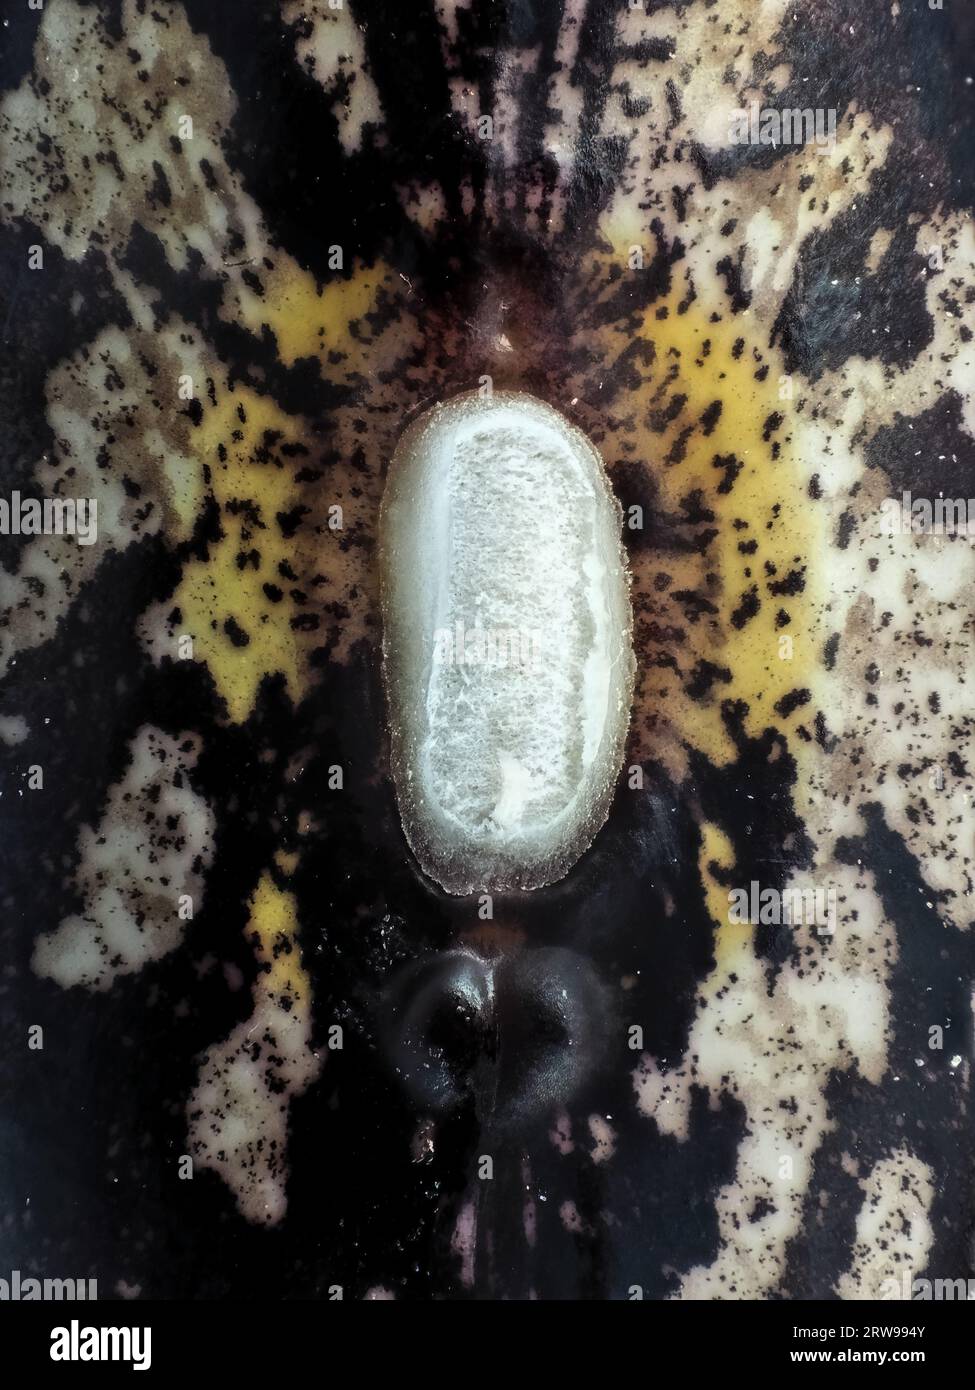 Garden bean's (Phaseolus vulgaris - Tendergreen Improved variety) hilum - 'eye' - under the microscope Stock Photo